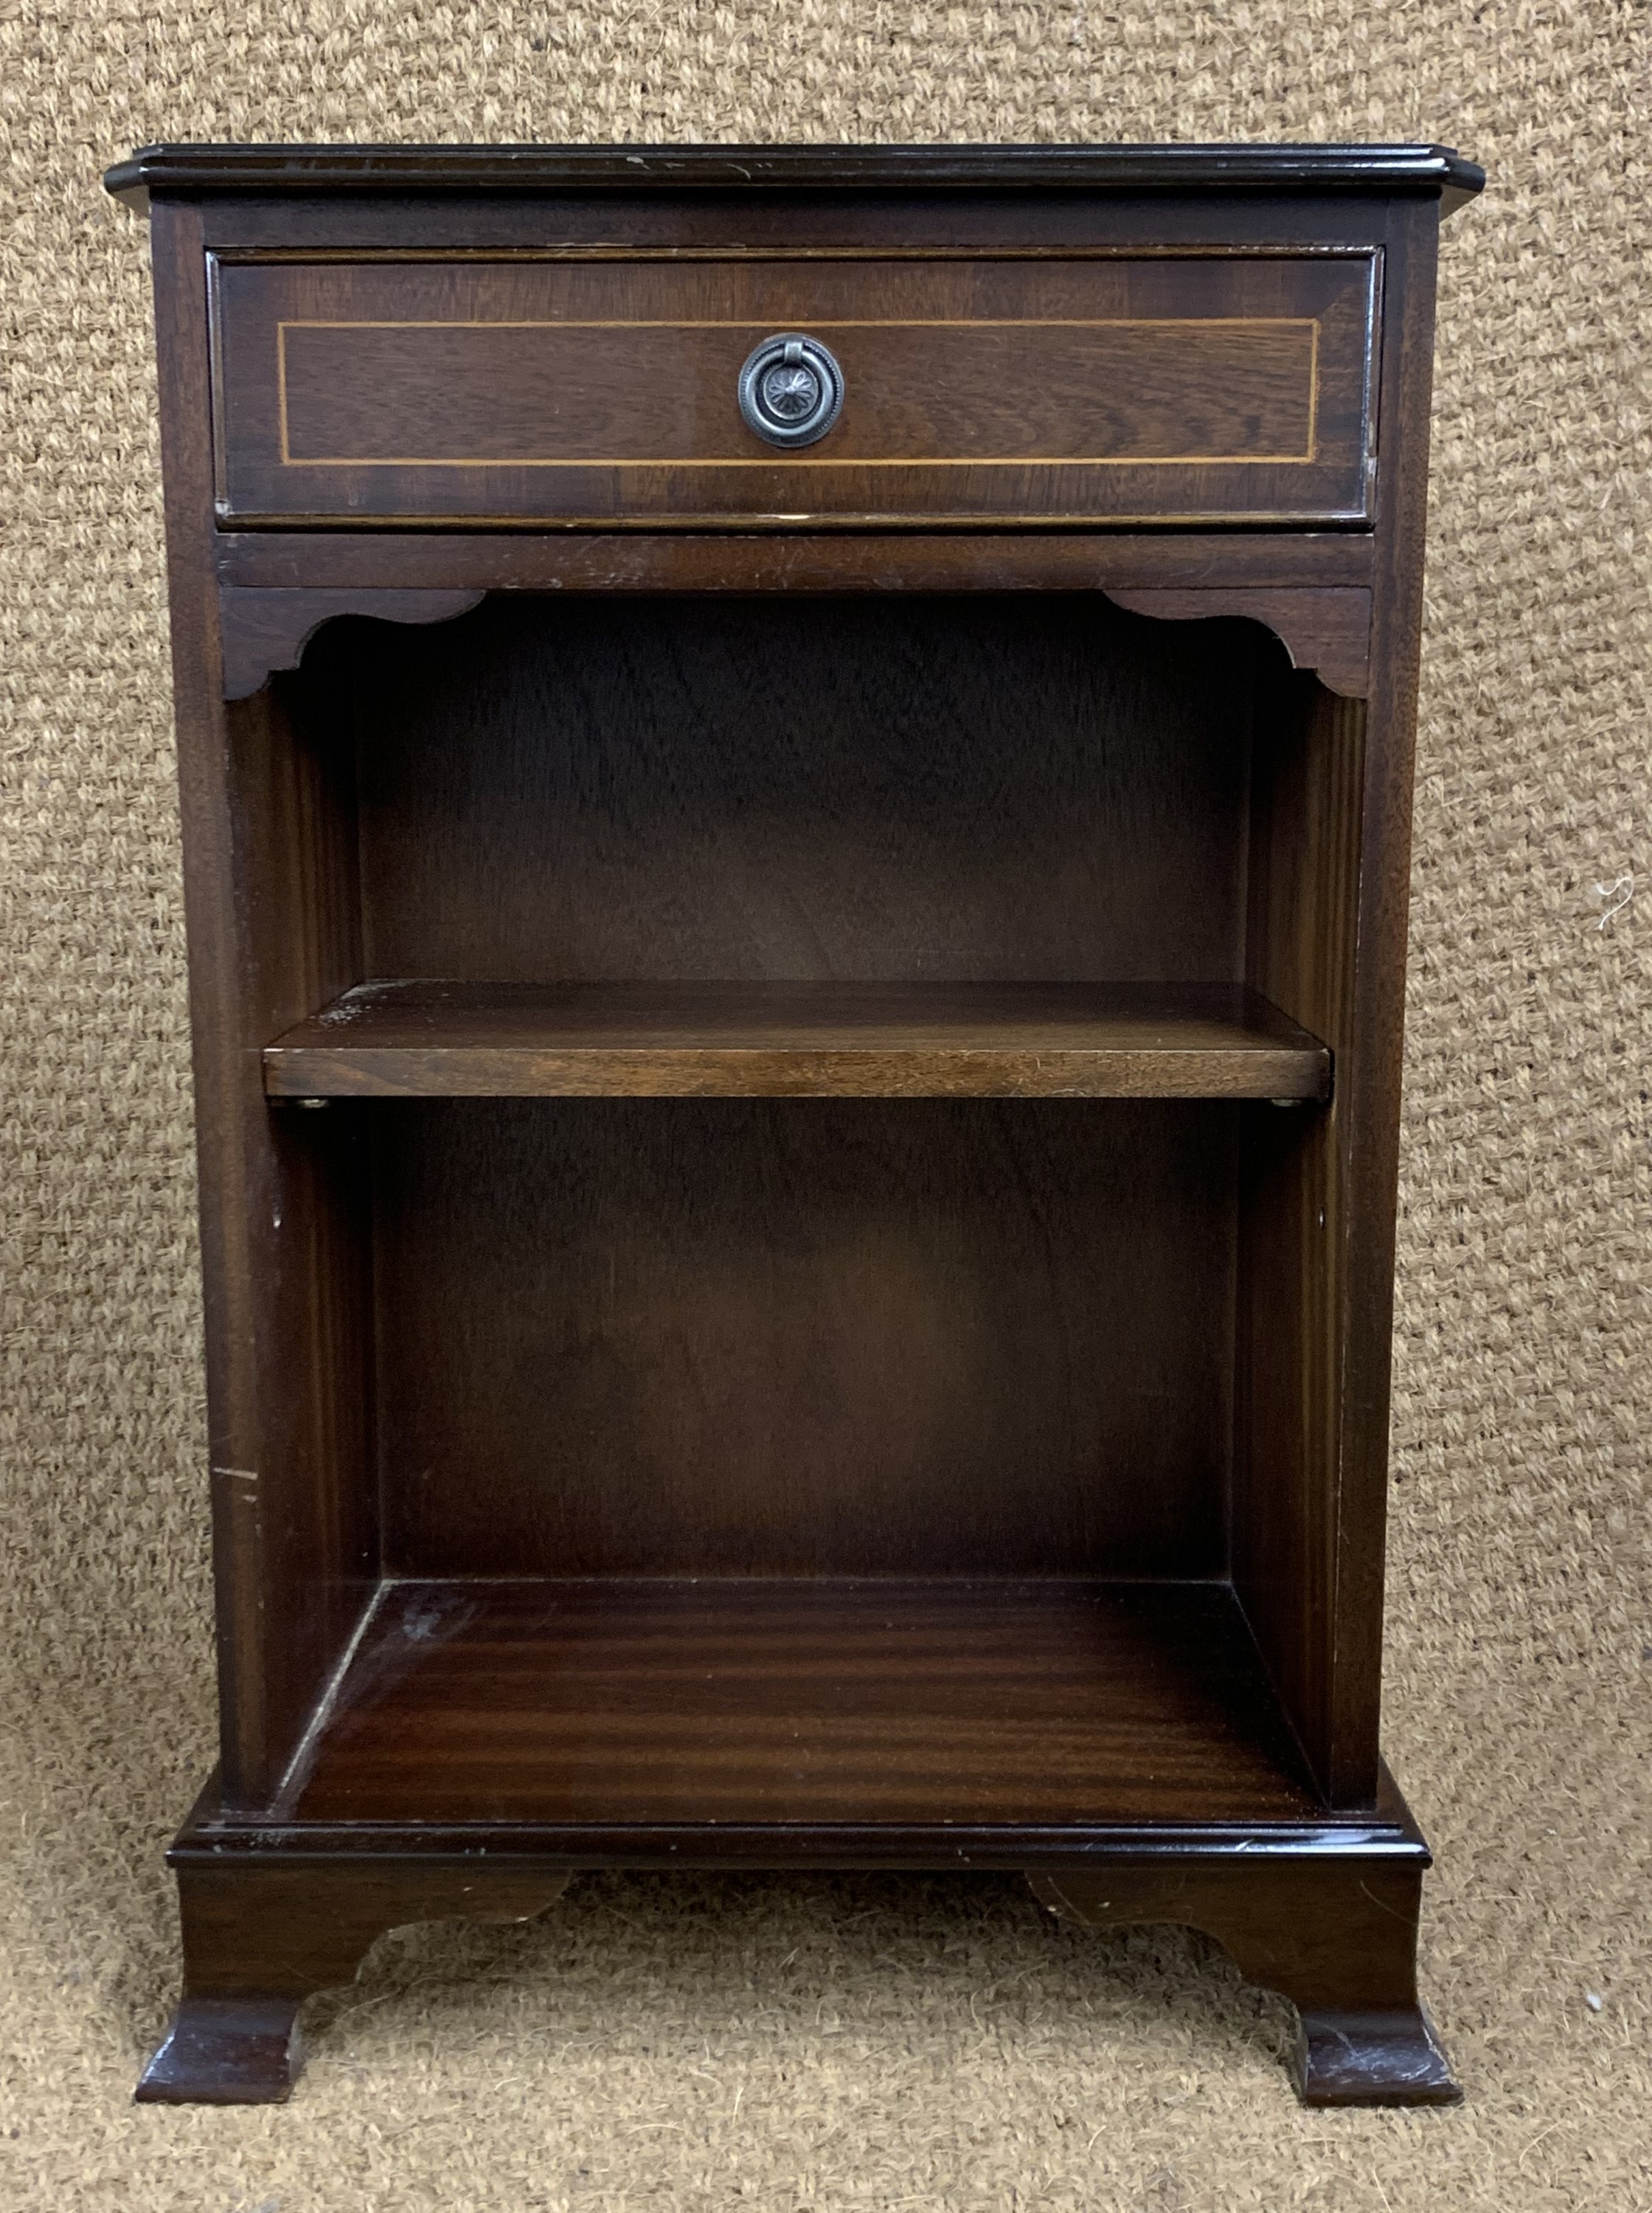 A Georgian influenced inlaid mahogany diminutive bookcase / bedside cabinet, 76 cm